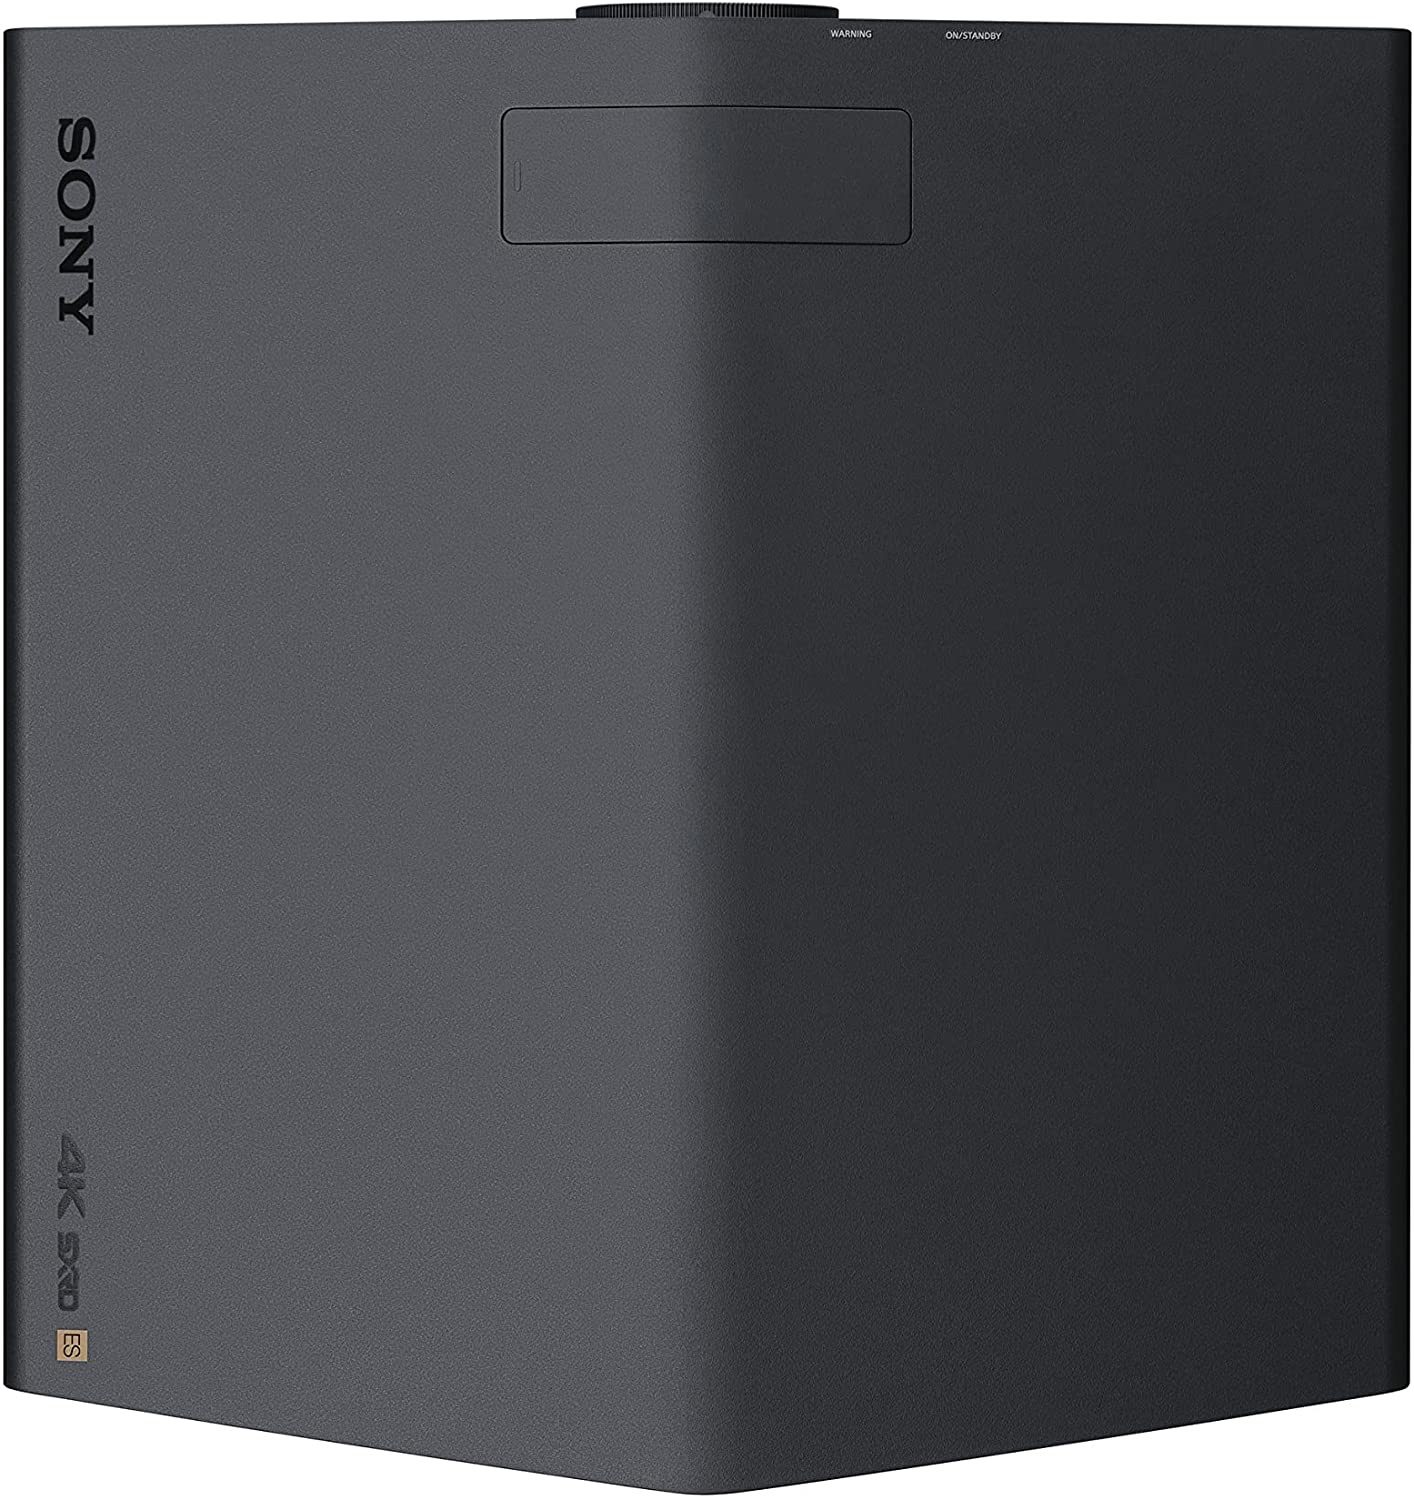 Sony VPL-XW5000ES zwart - Beamer